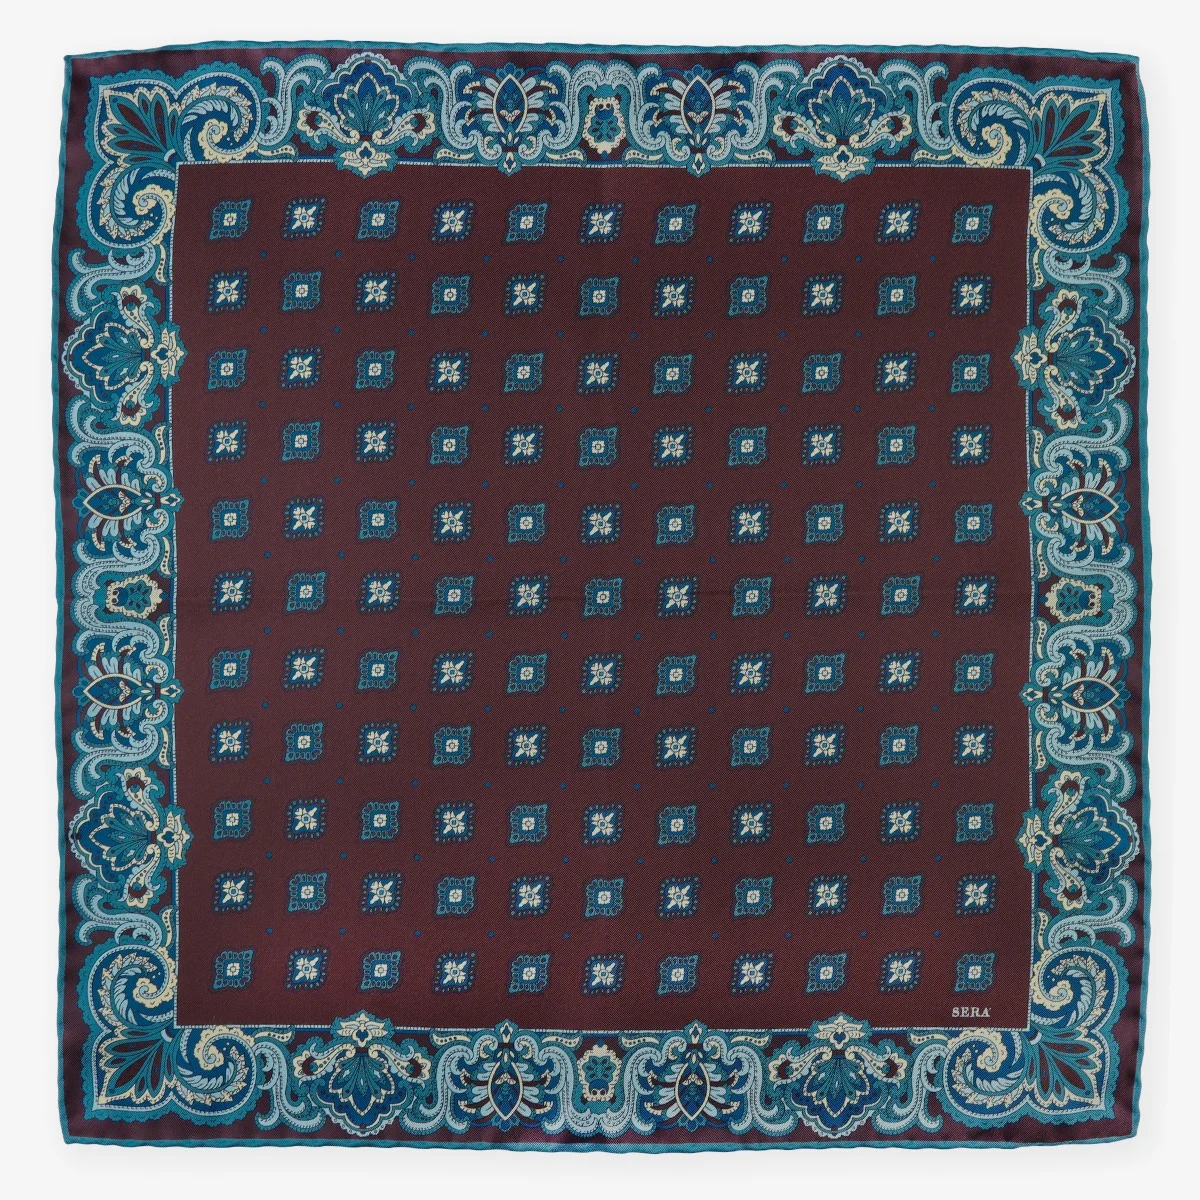 Serà Fine Silk Elleboro burgundy blue silk pocket square